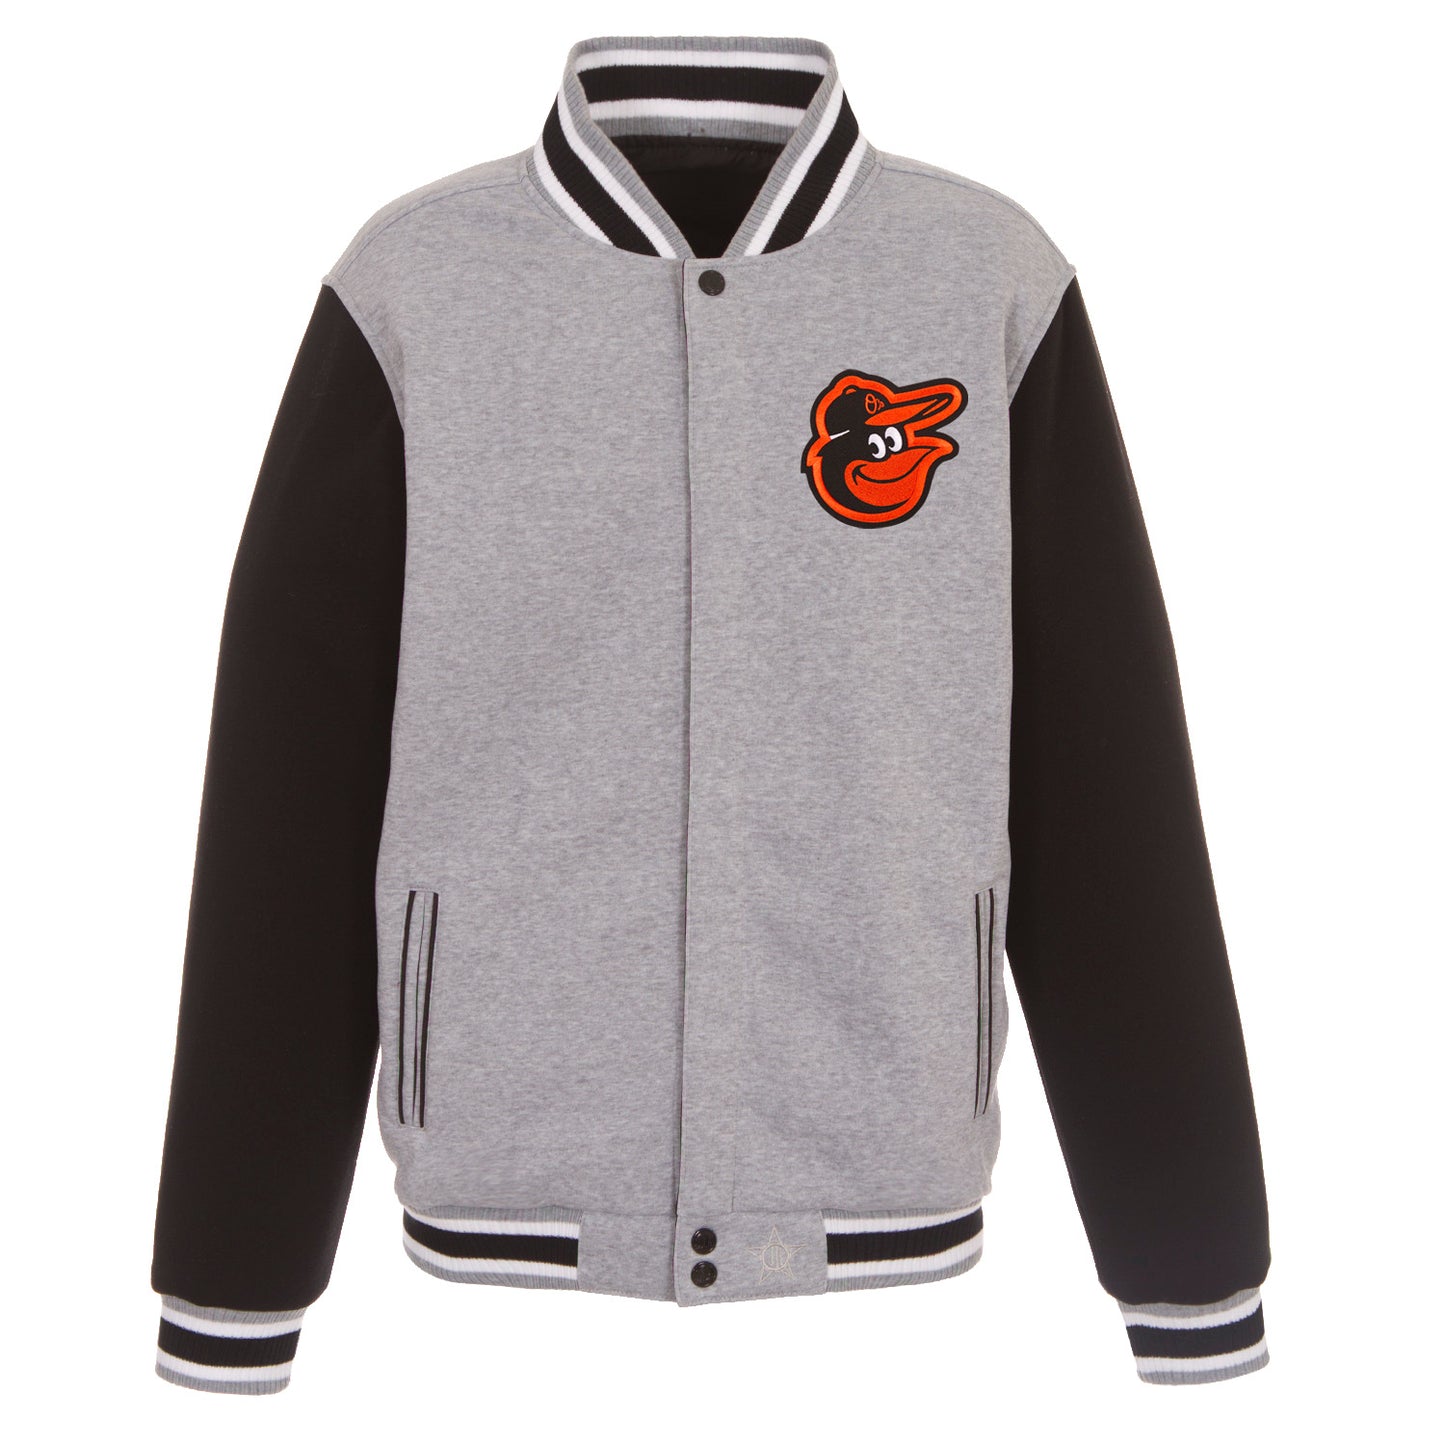 Baltimore Orioles Reversible Fleece Jacket